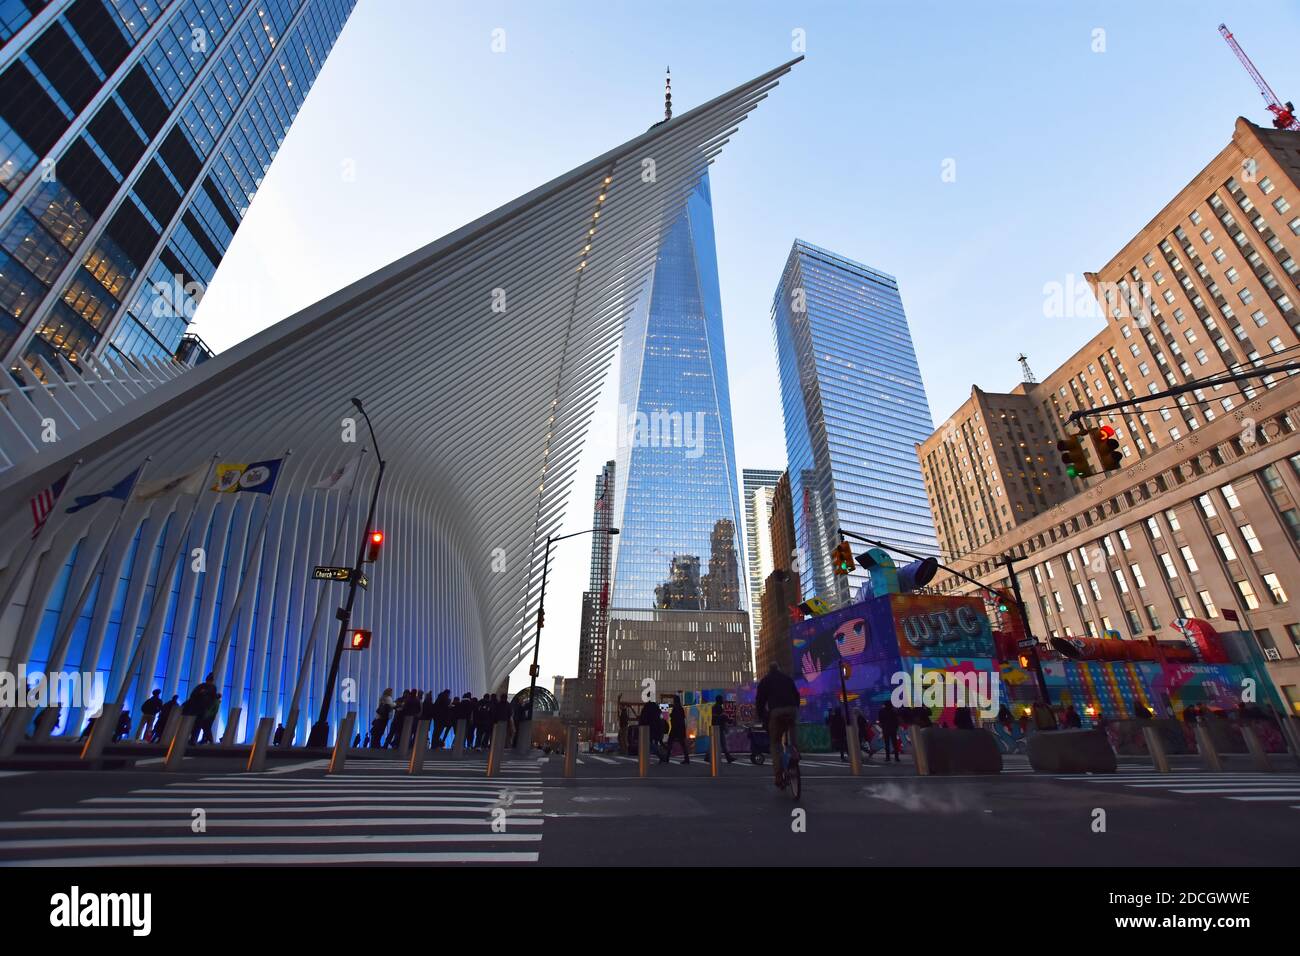 New York, USA - November 30, 2019. The Oculus, centerpiece of the World Trade Center Transportation Hub in Lower Manhattan, New York, United States Stock Photo